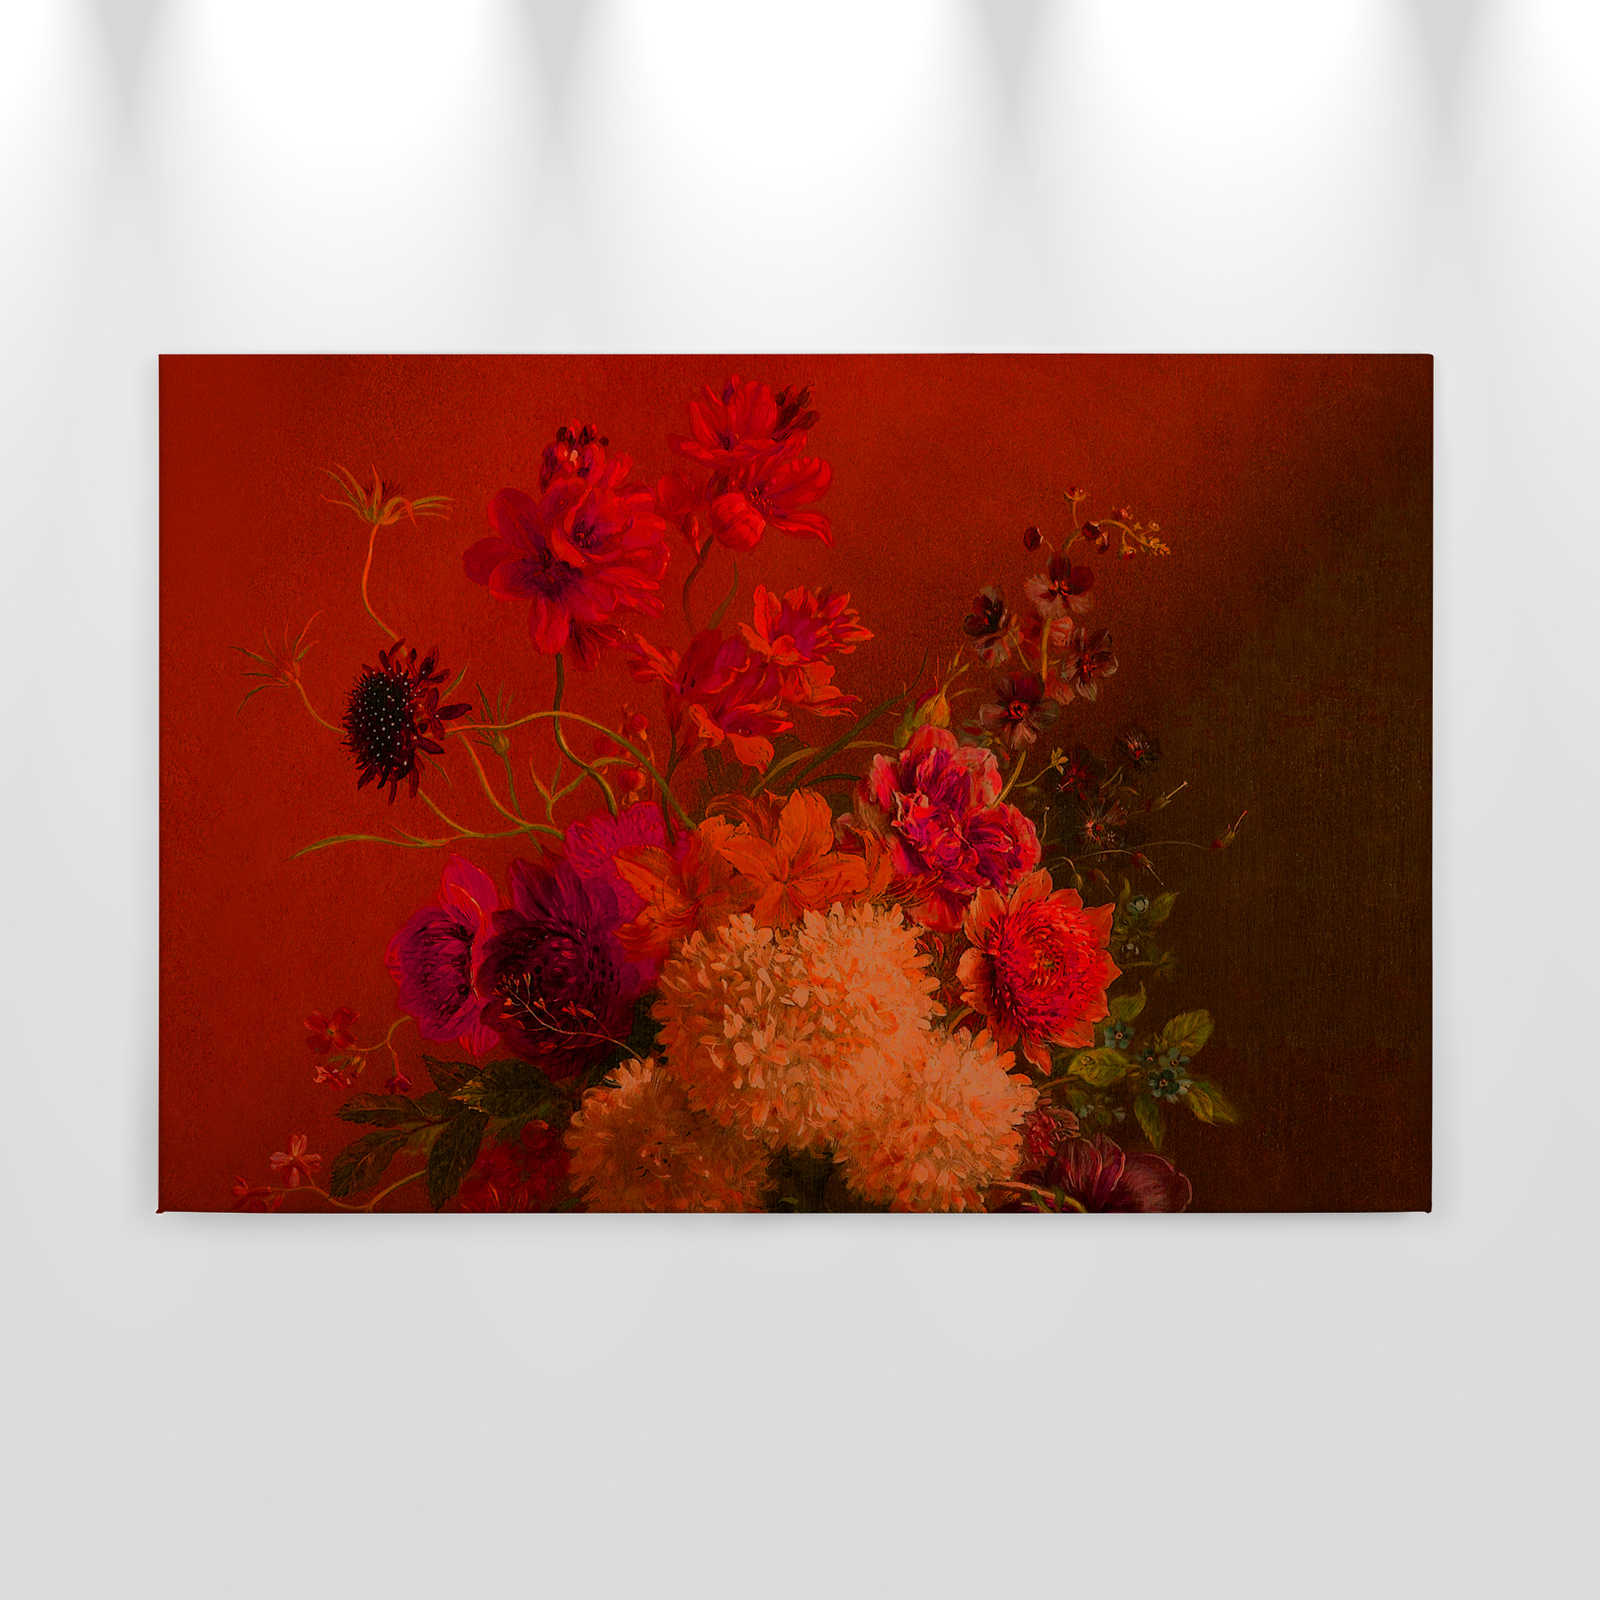             Pintura en lienzo neón con flores Naturaleza muerta | paredes by patel - 0.90 m x 0.60 m
        